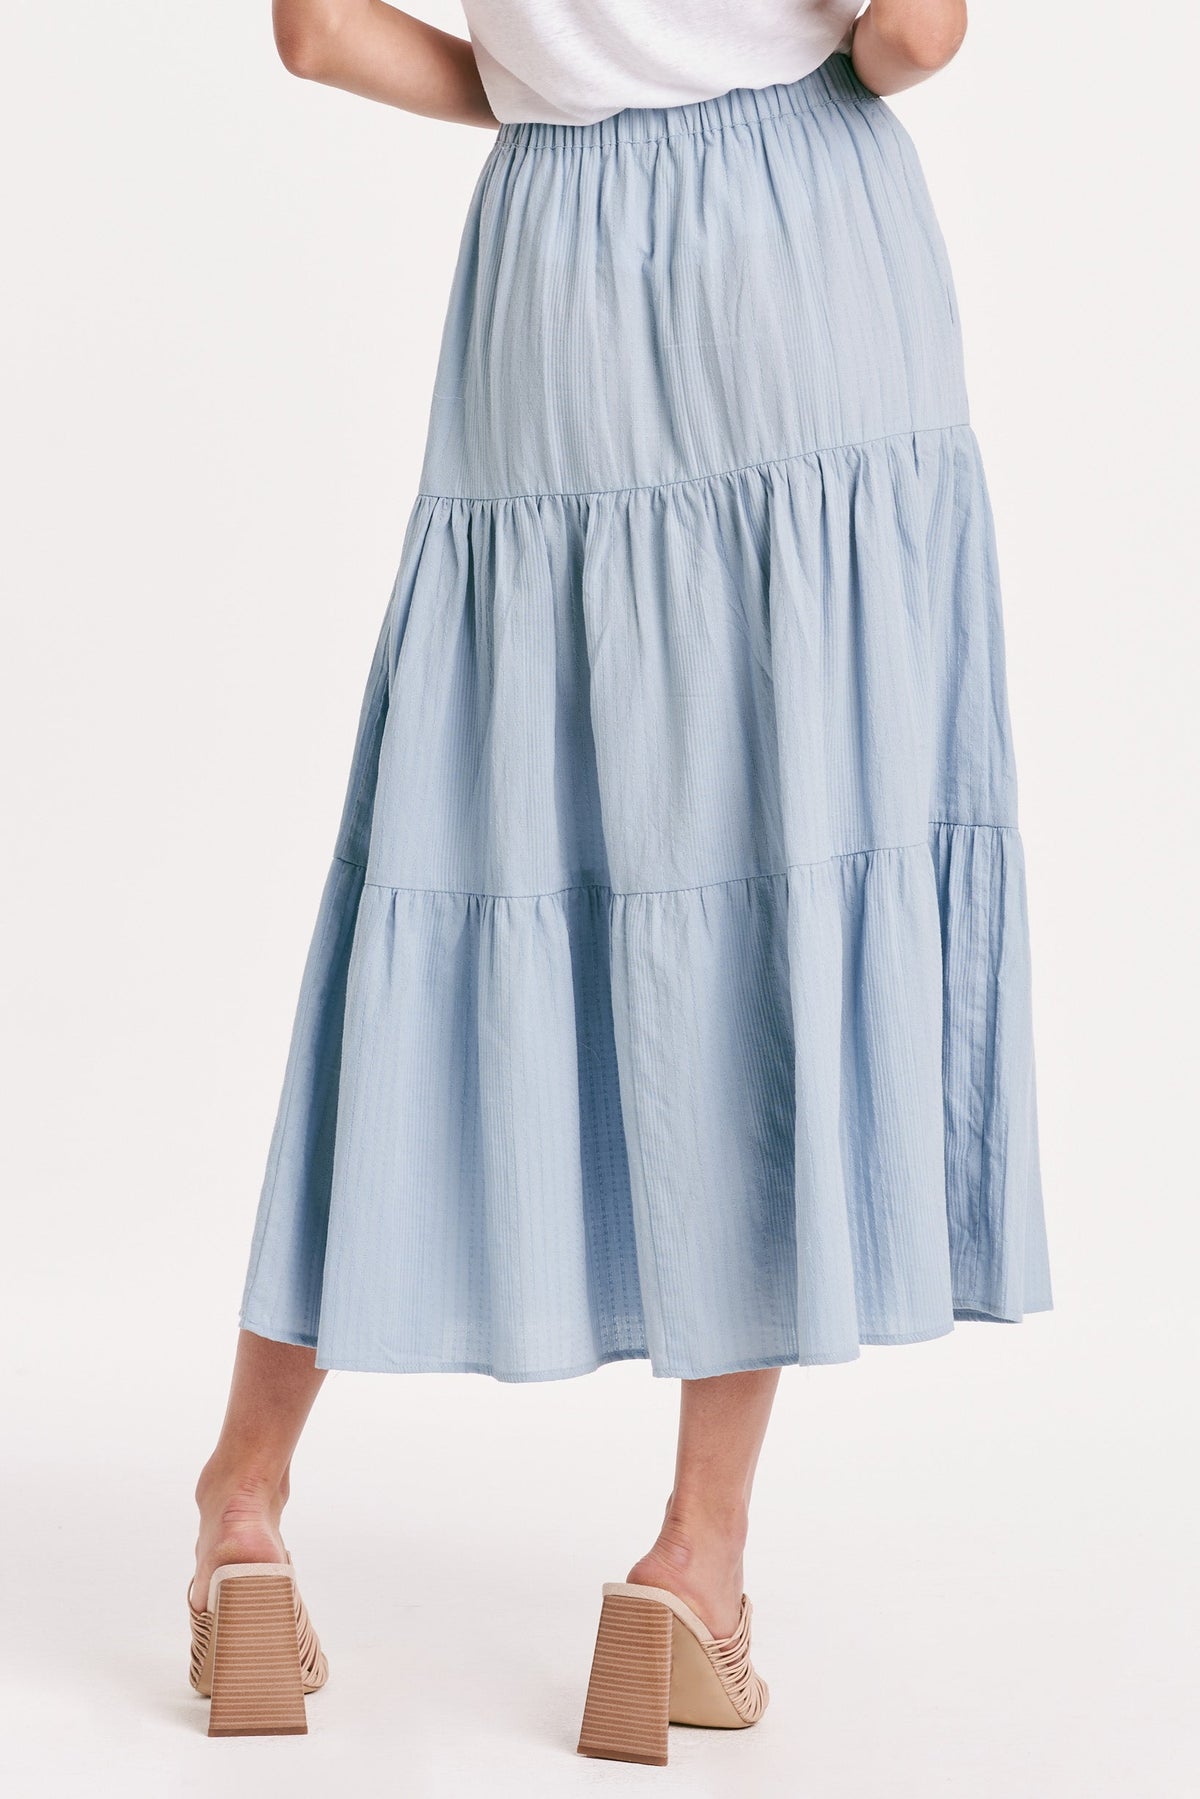 keira-tiered-midi-skirt-dusty-blue